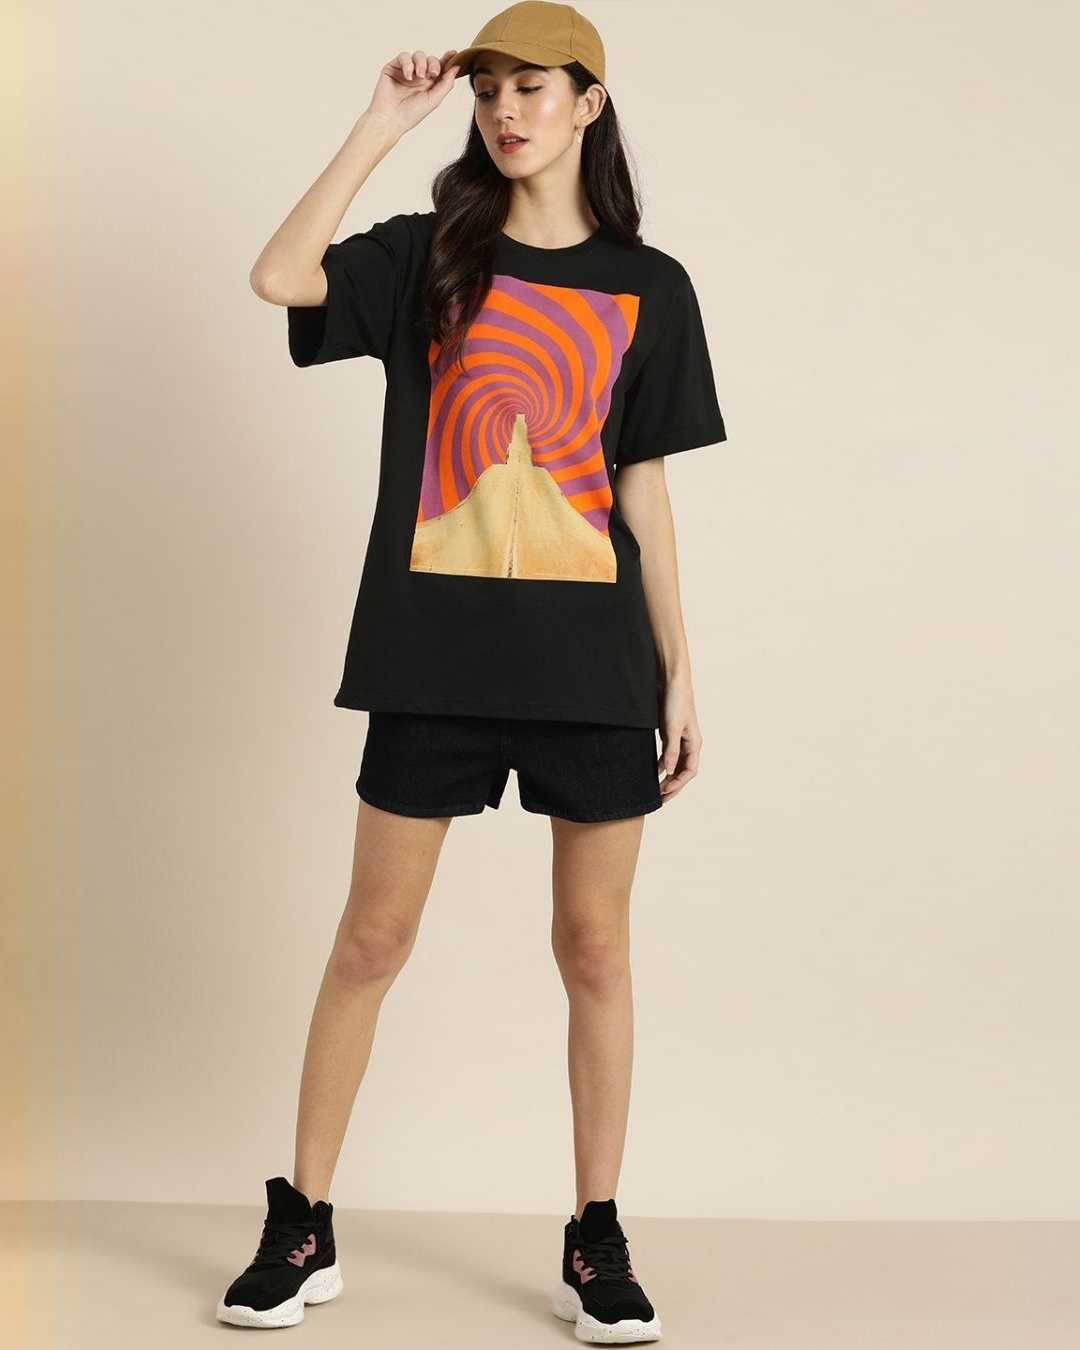 Shop Women's Black Printed T-shirt